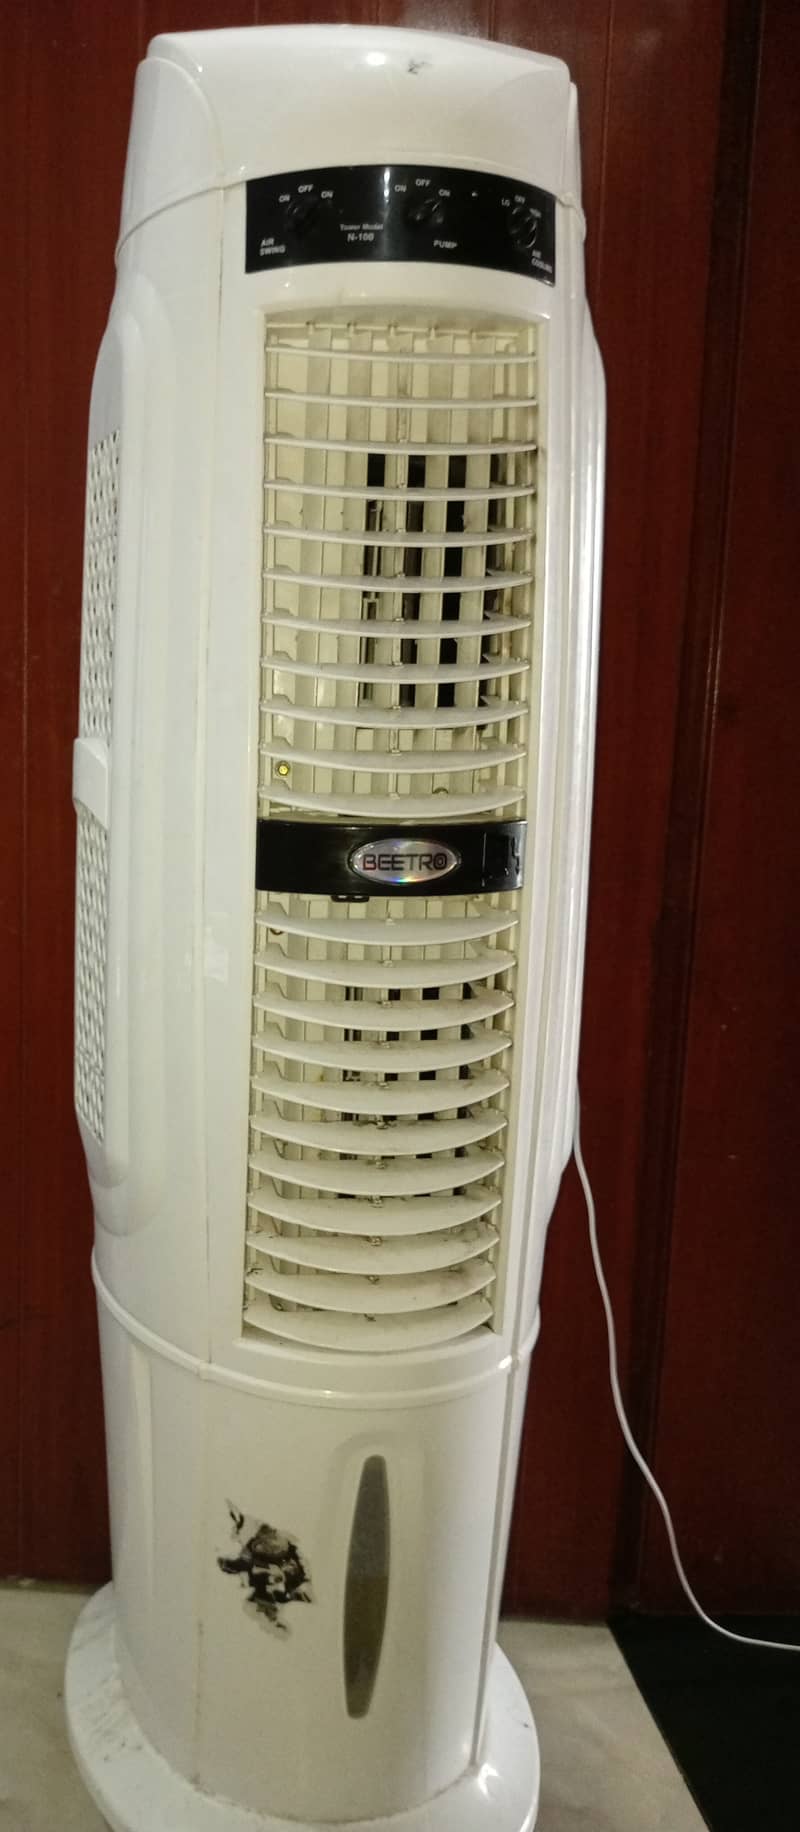 Beetro room air cooler N-100 tower inverter 3